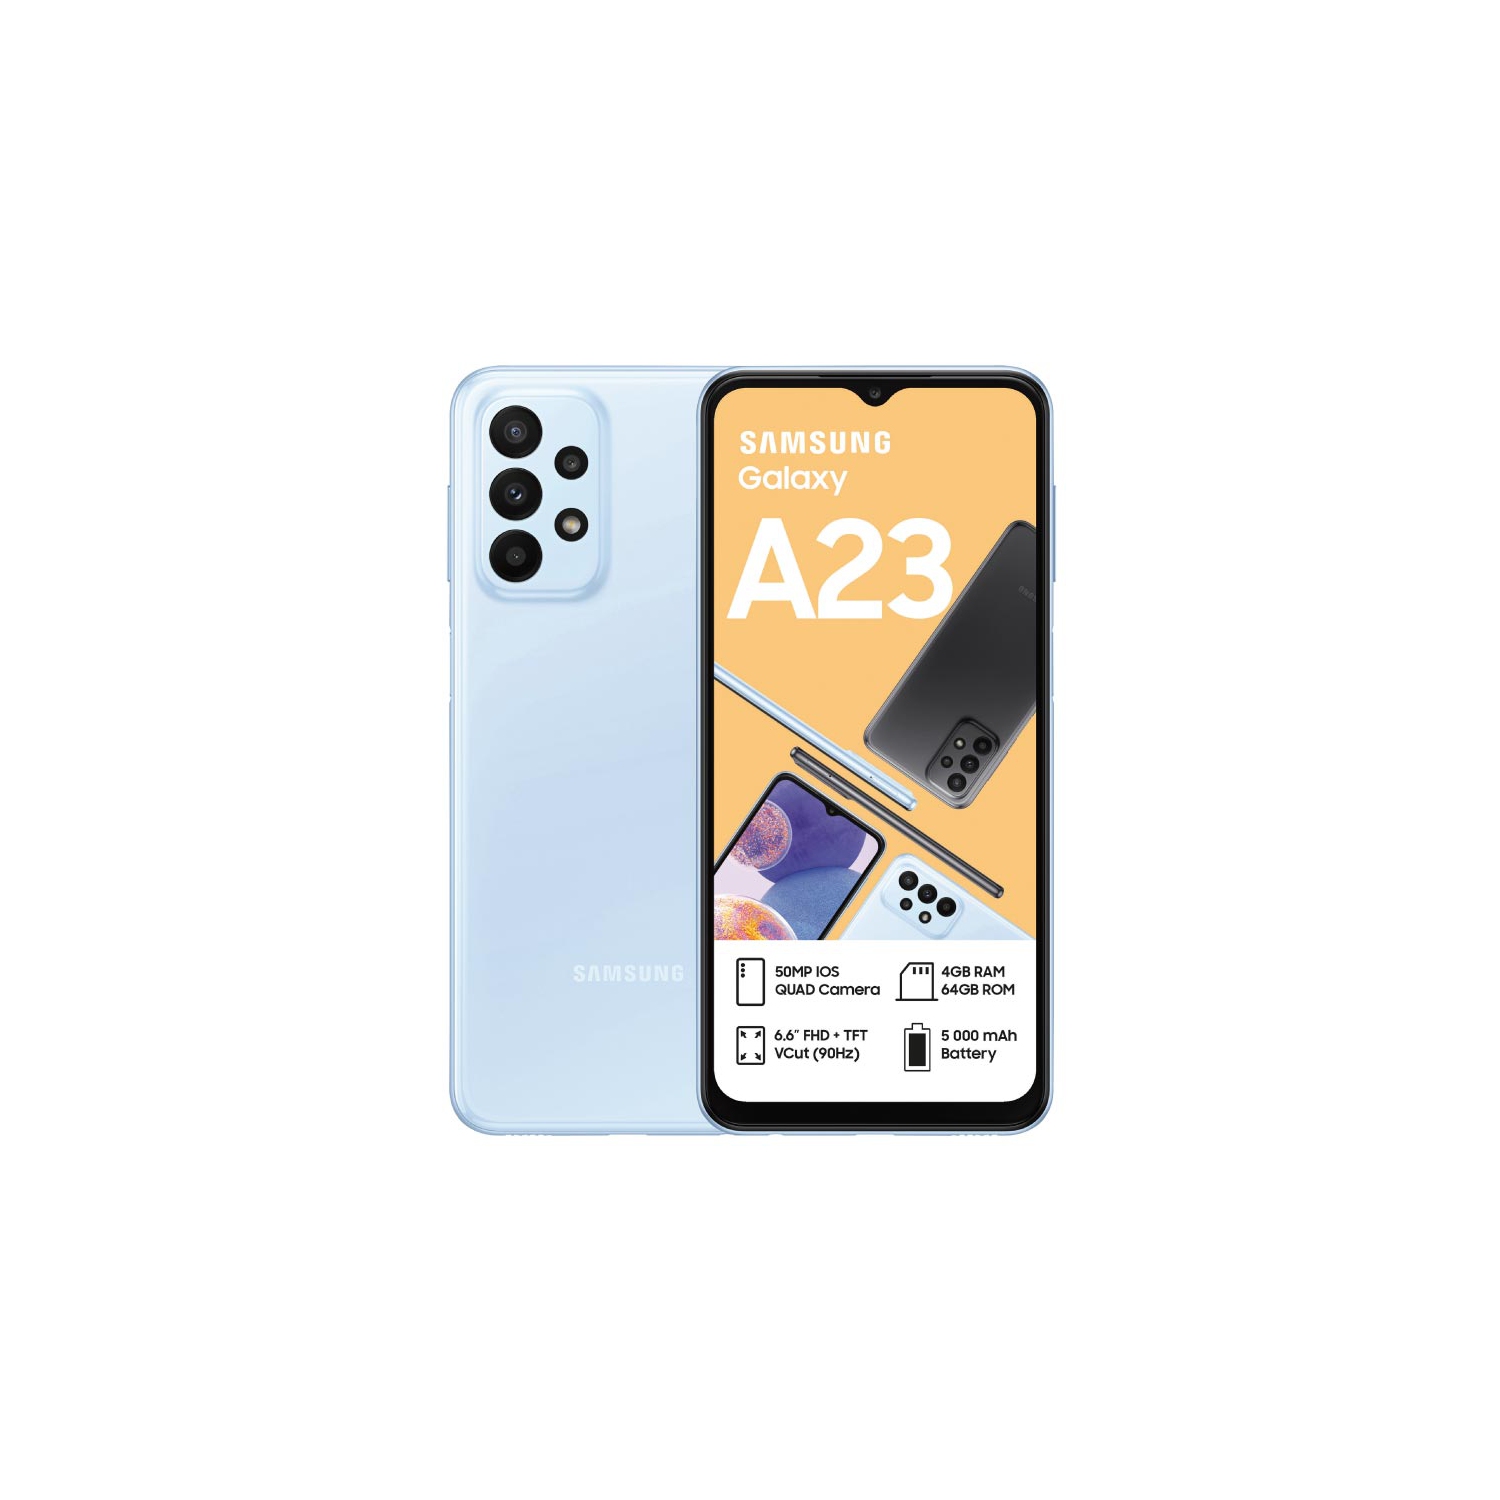 Samsung Galaxy A23 - SM-235M/DS| 128 GB, Unlocked Smartphone| Brand new, Sealed| 2022 - BLUE